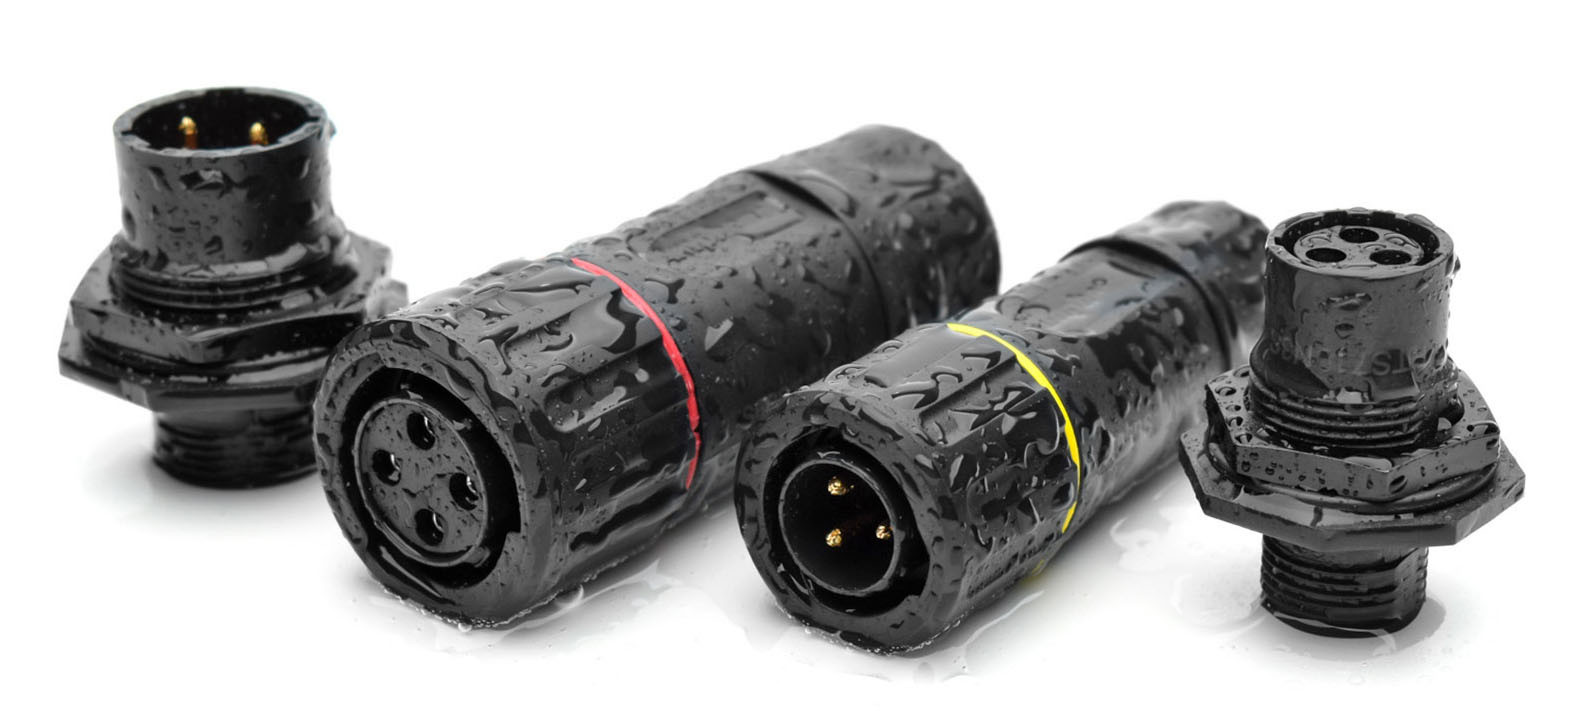 The ecomate Aquarius Series of waterproof connectors